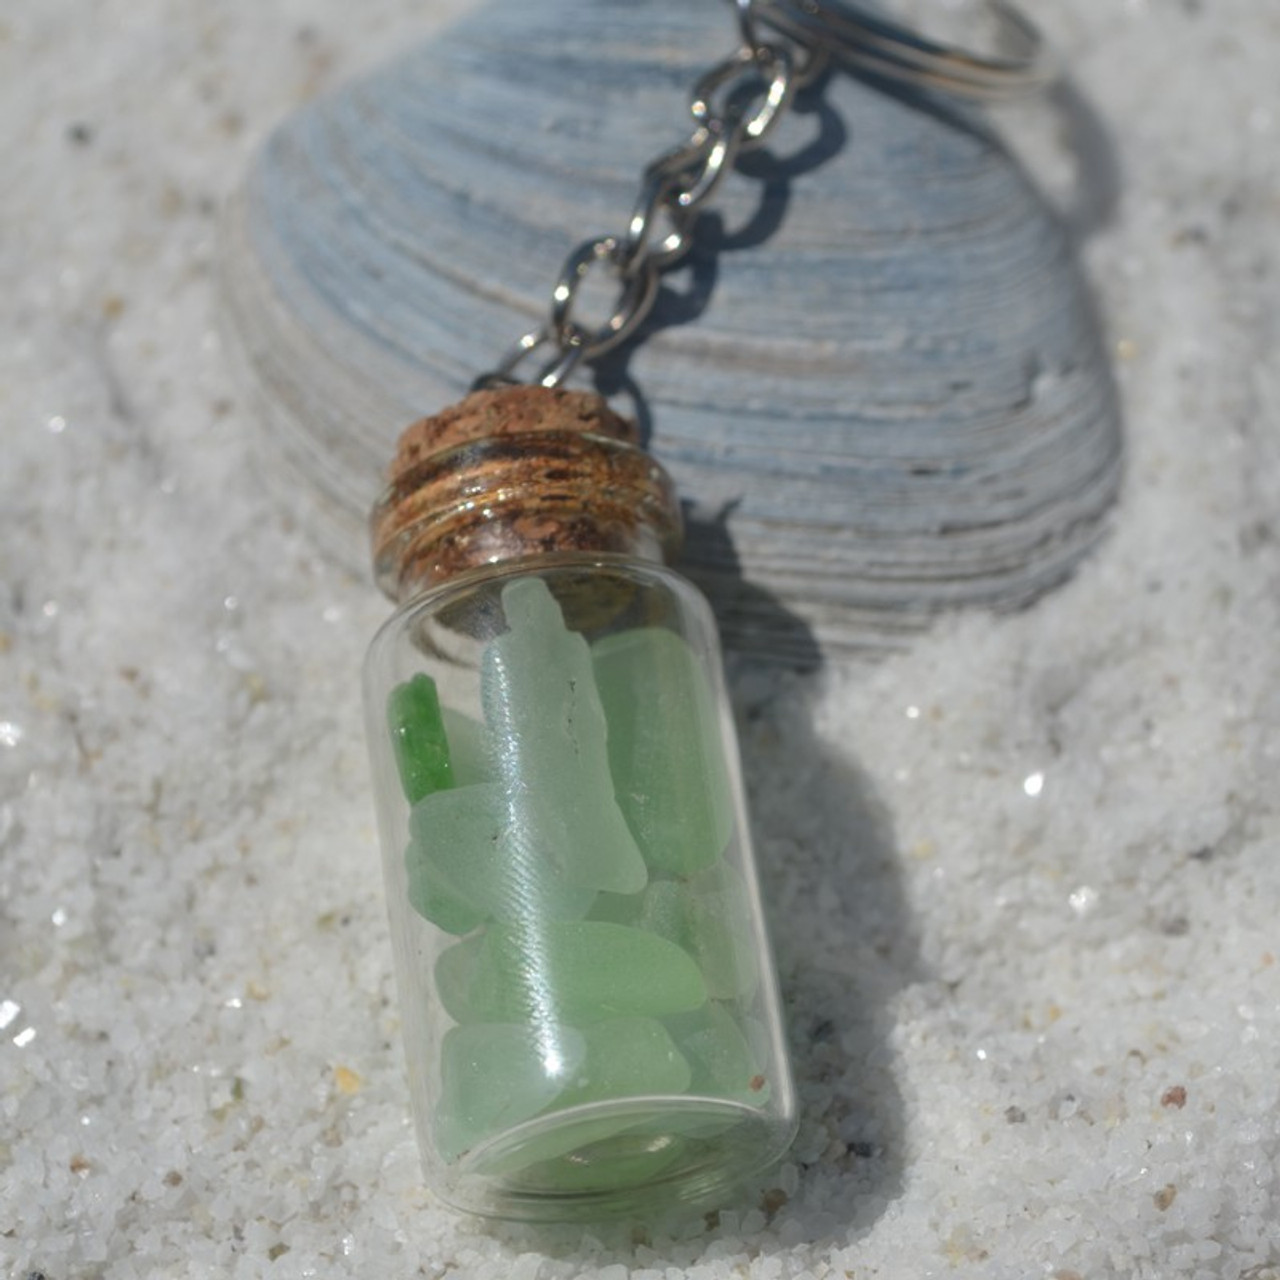 Aqua and Sea Foam Sea Glass in a Glass Vial Key Chain - Made to Order